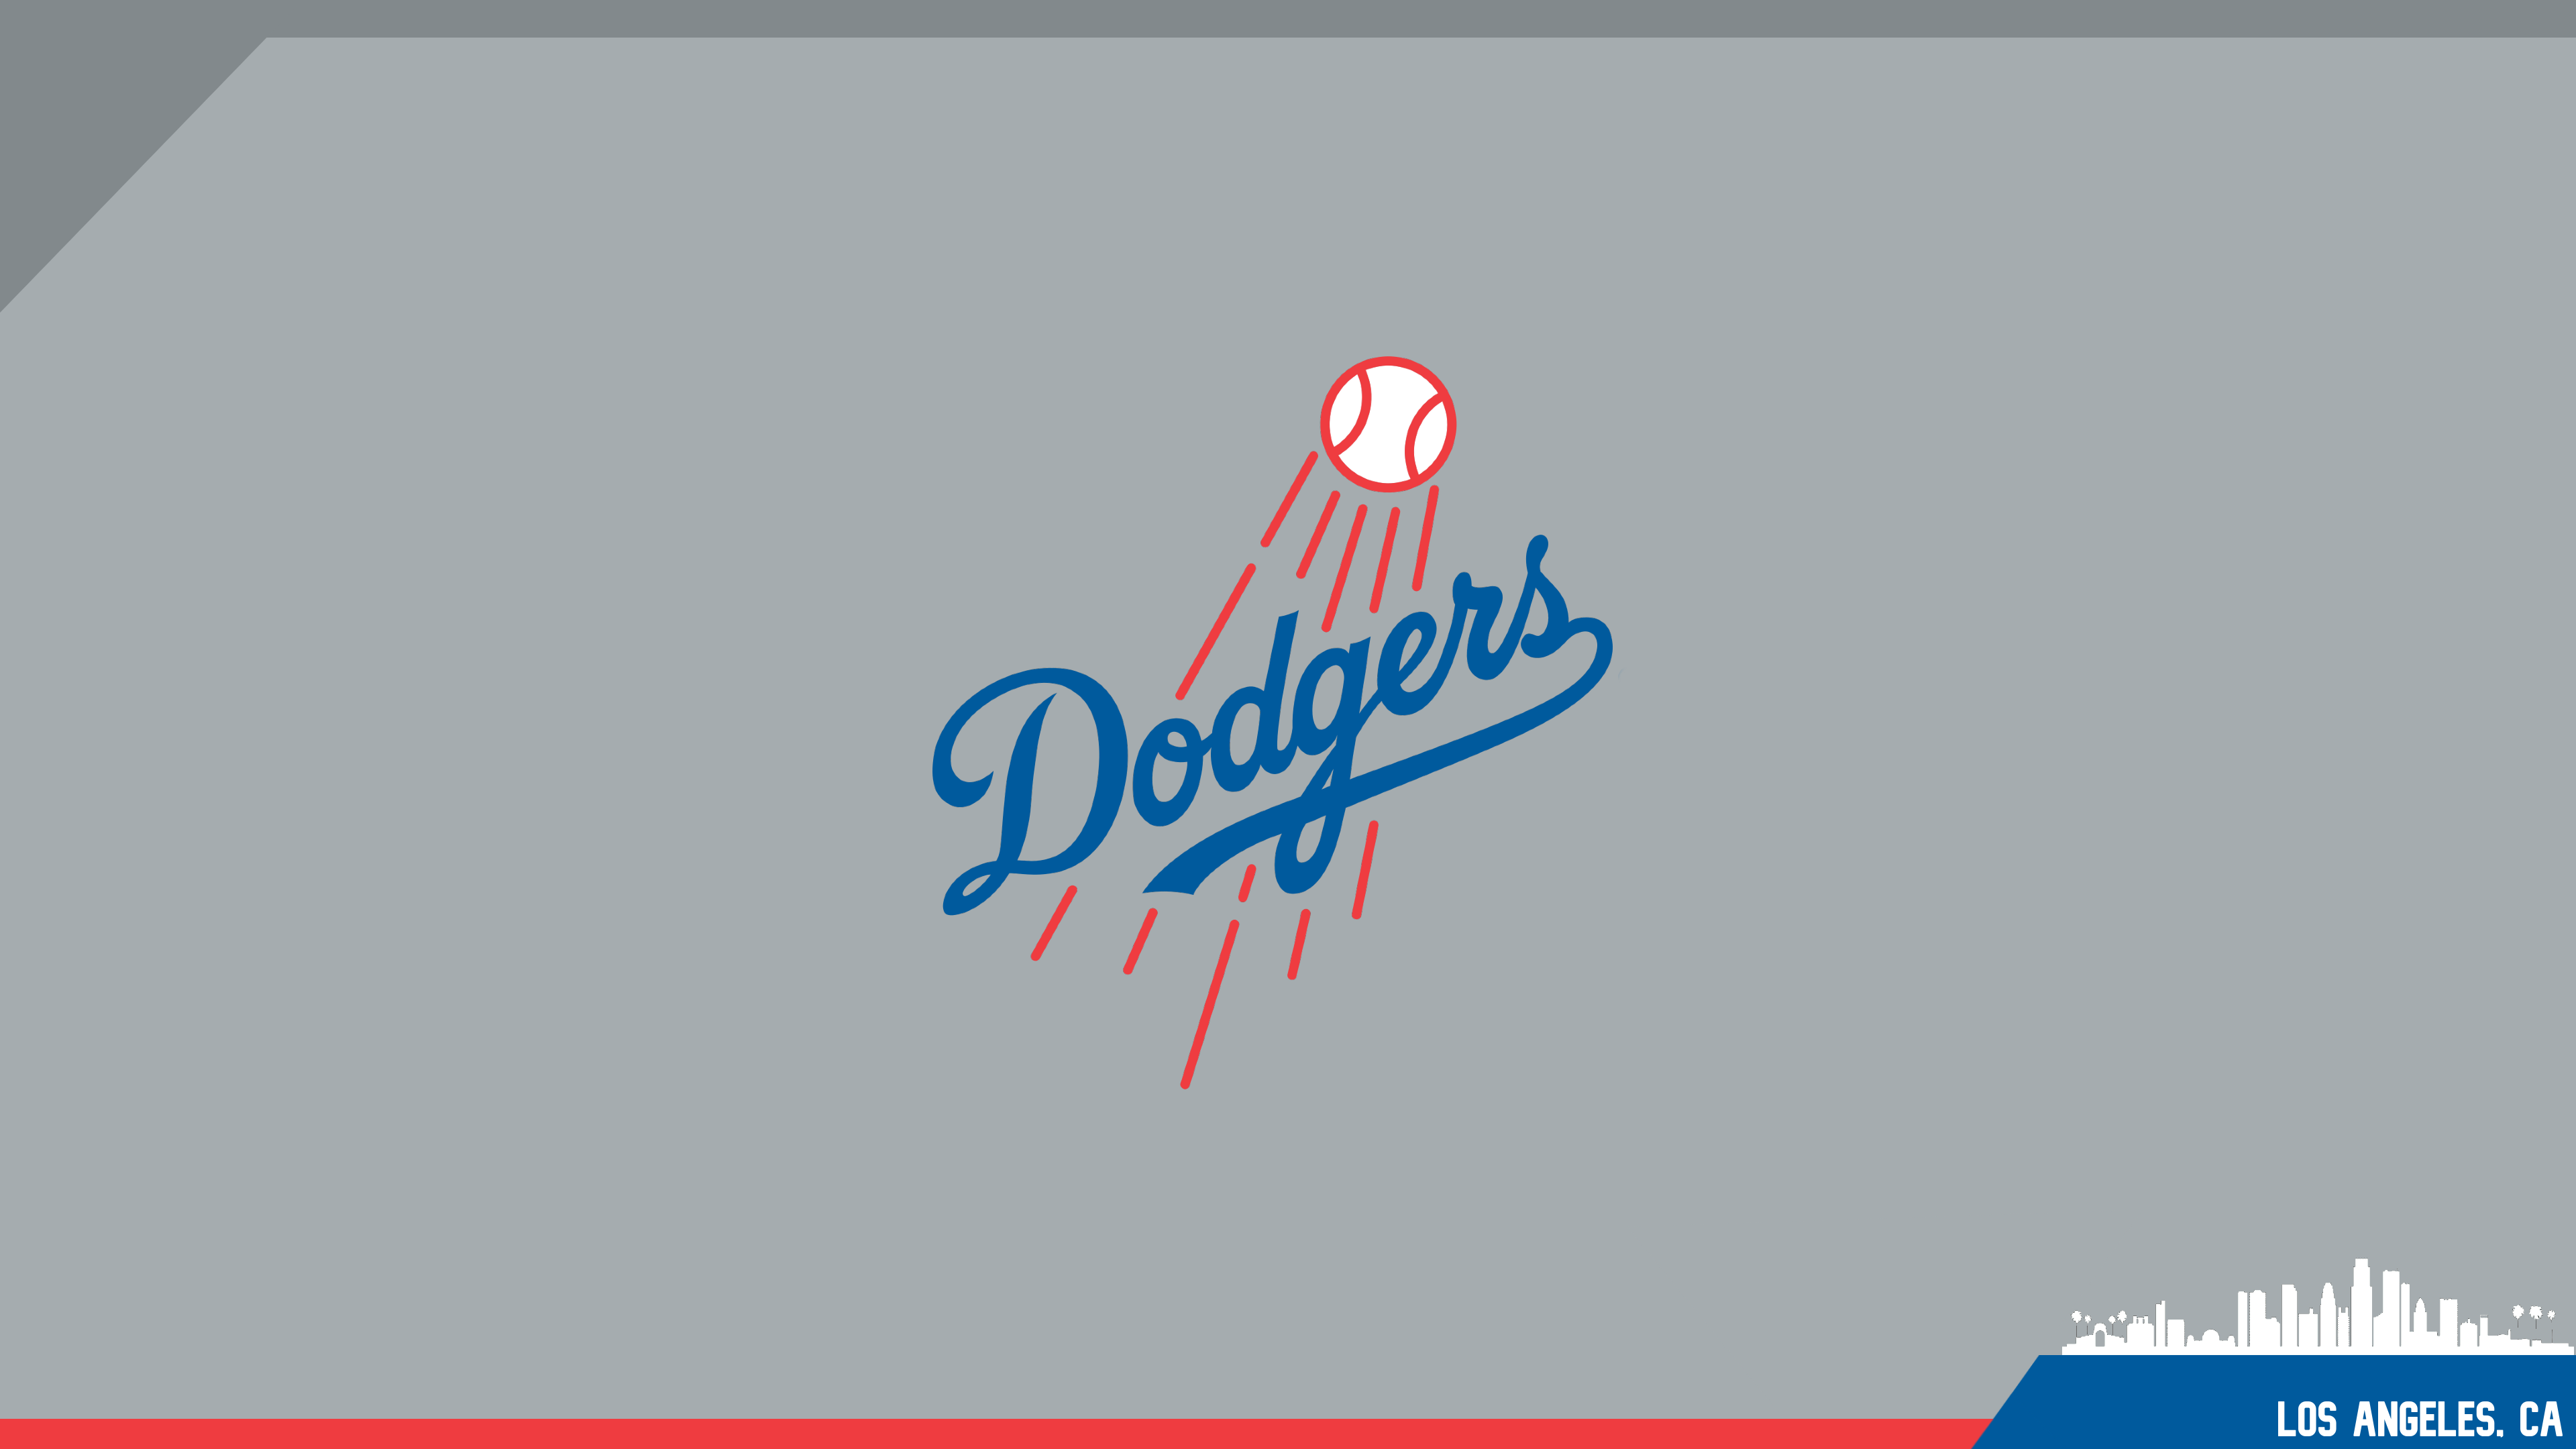 OC] Dodgers Skyline Silhouette Desktop Wallpaper [4K]